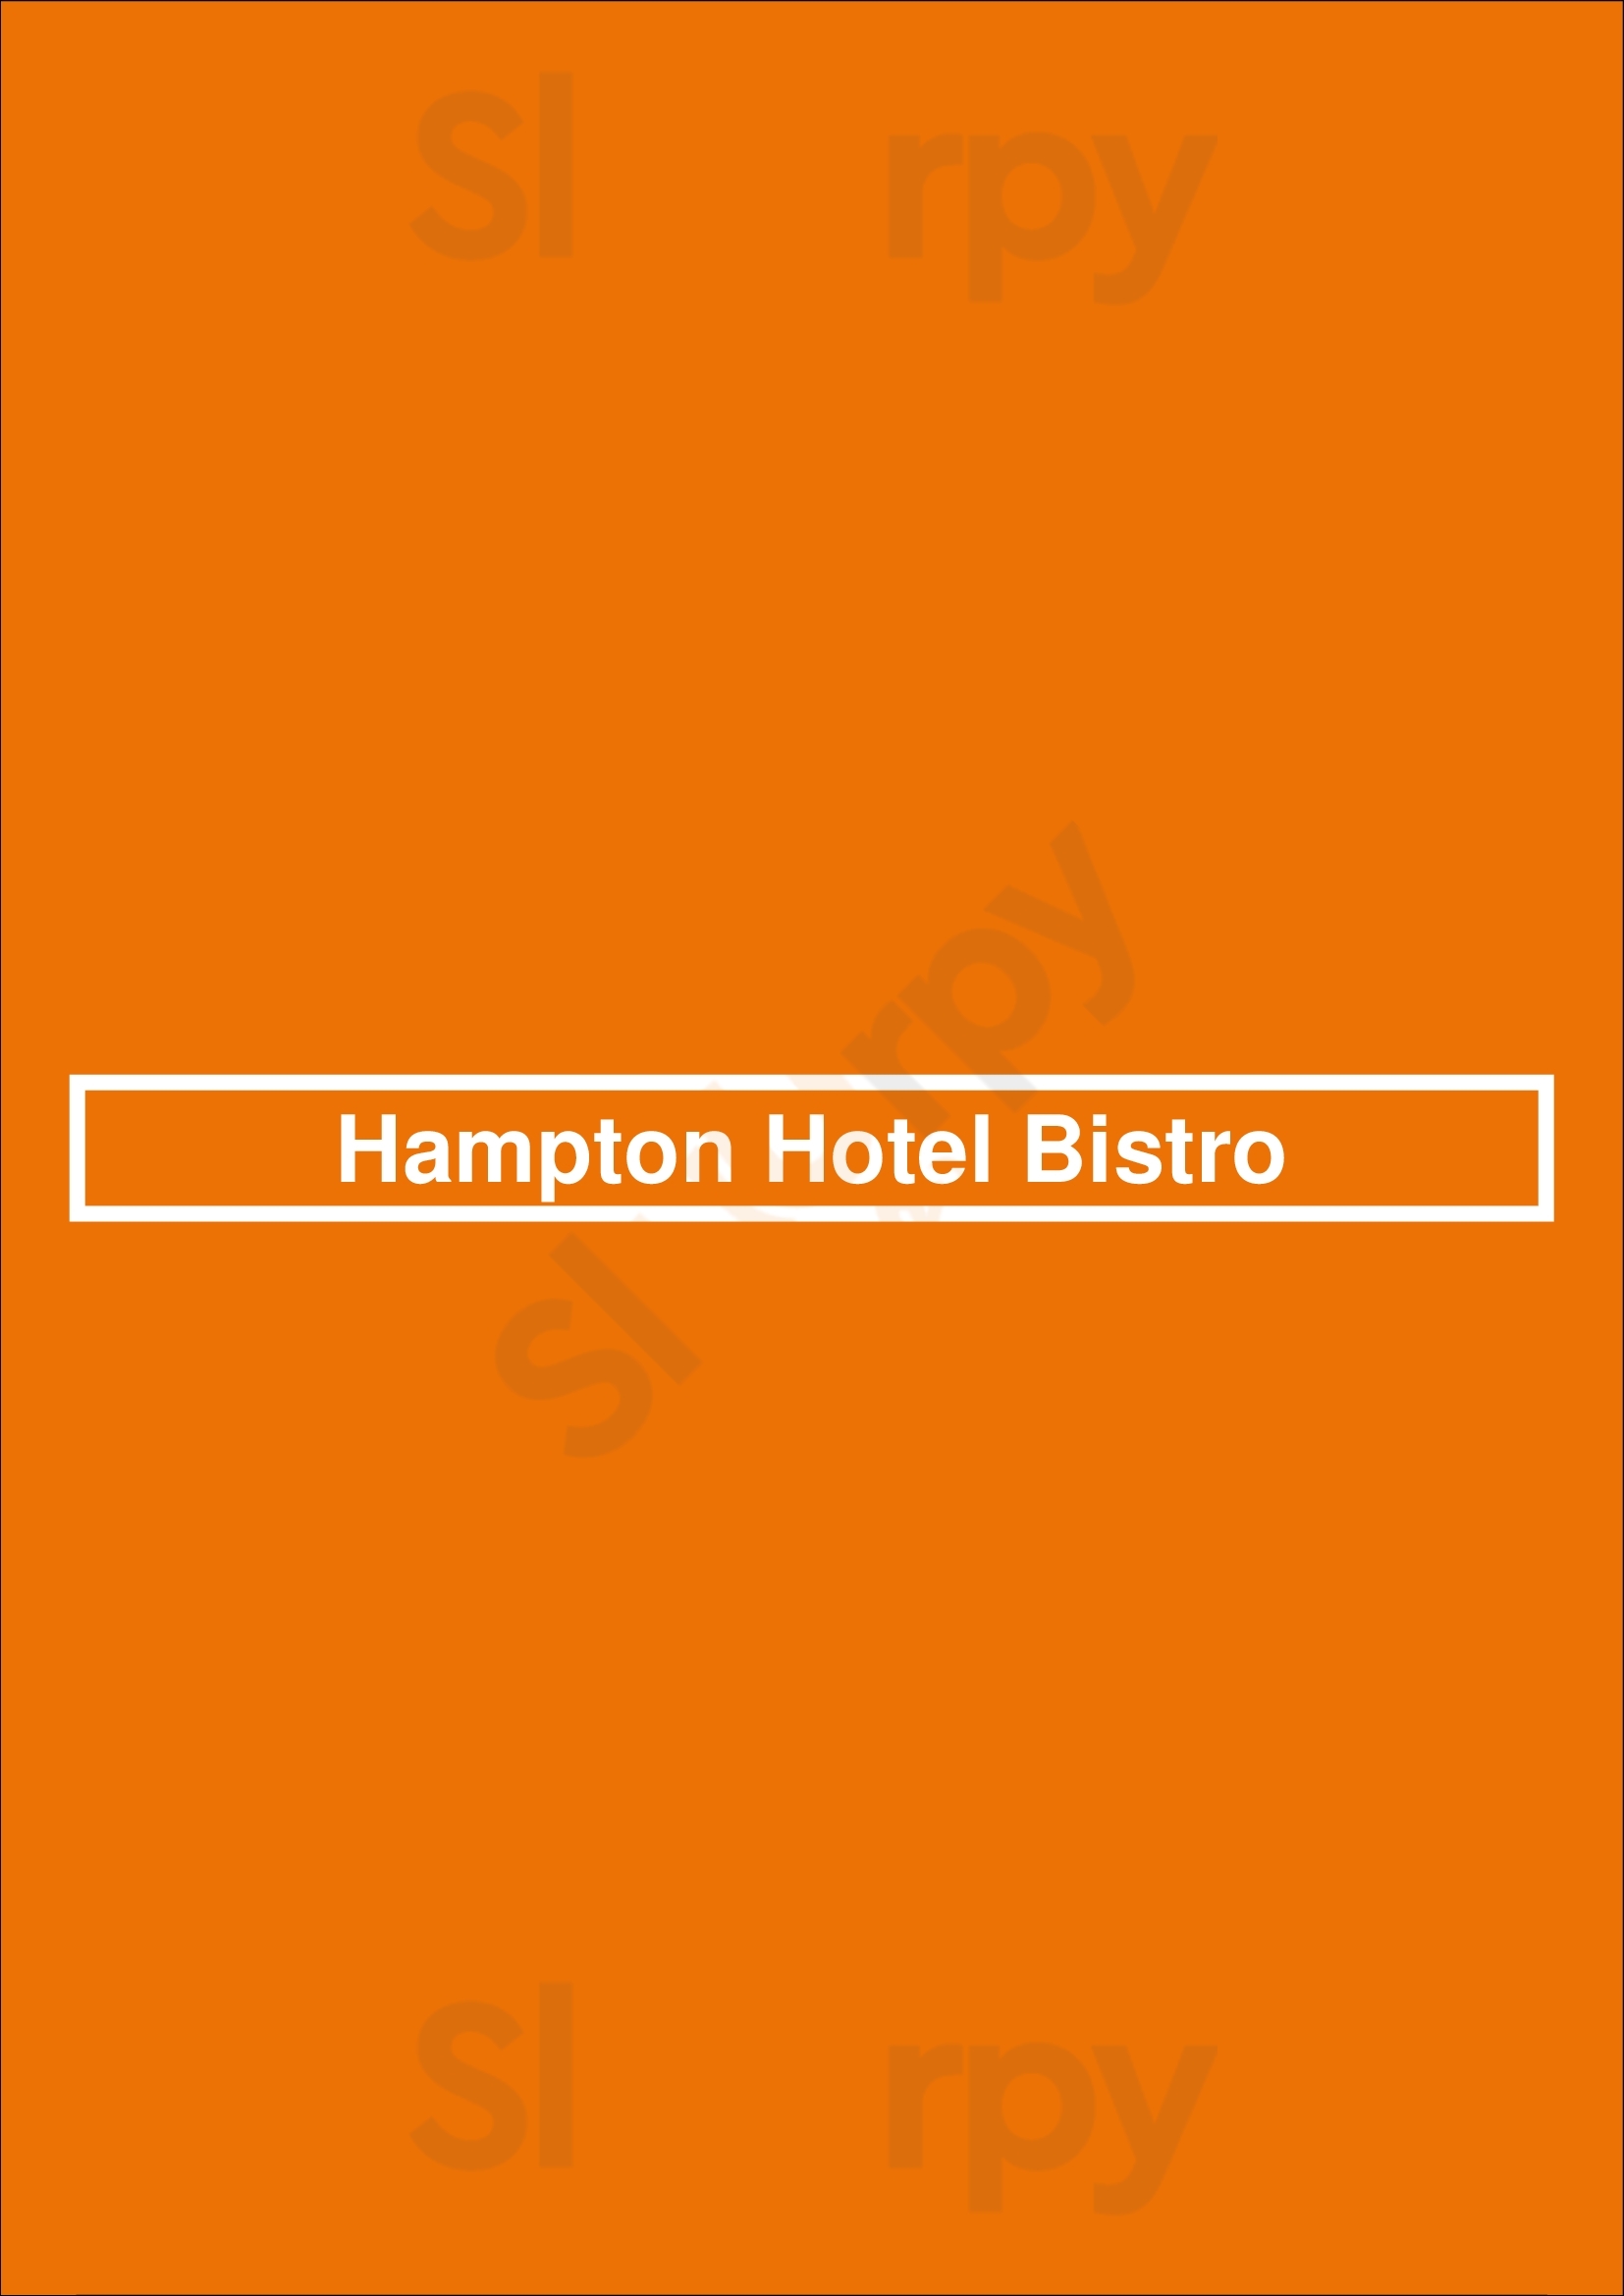 Hampton Hotel Bistro Dublin Menu - 1